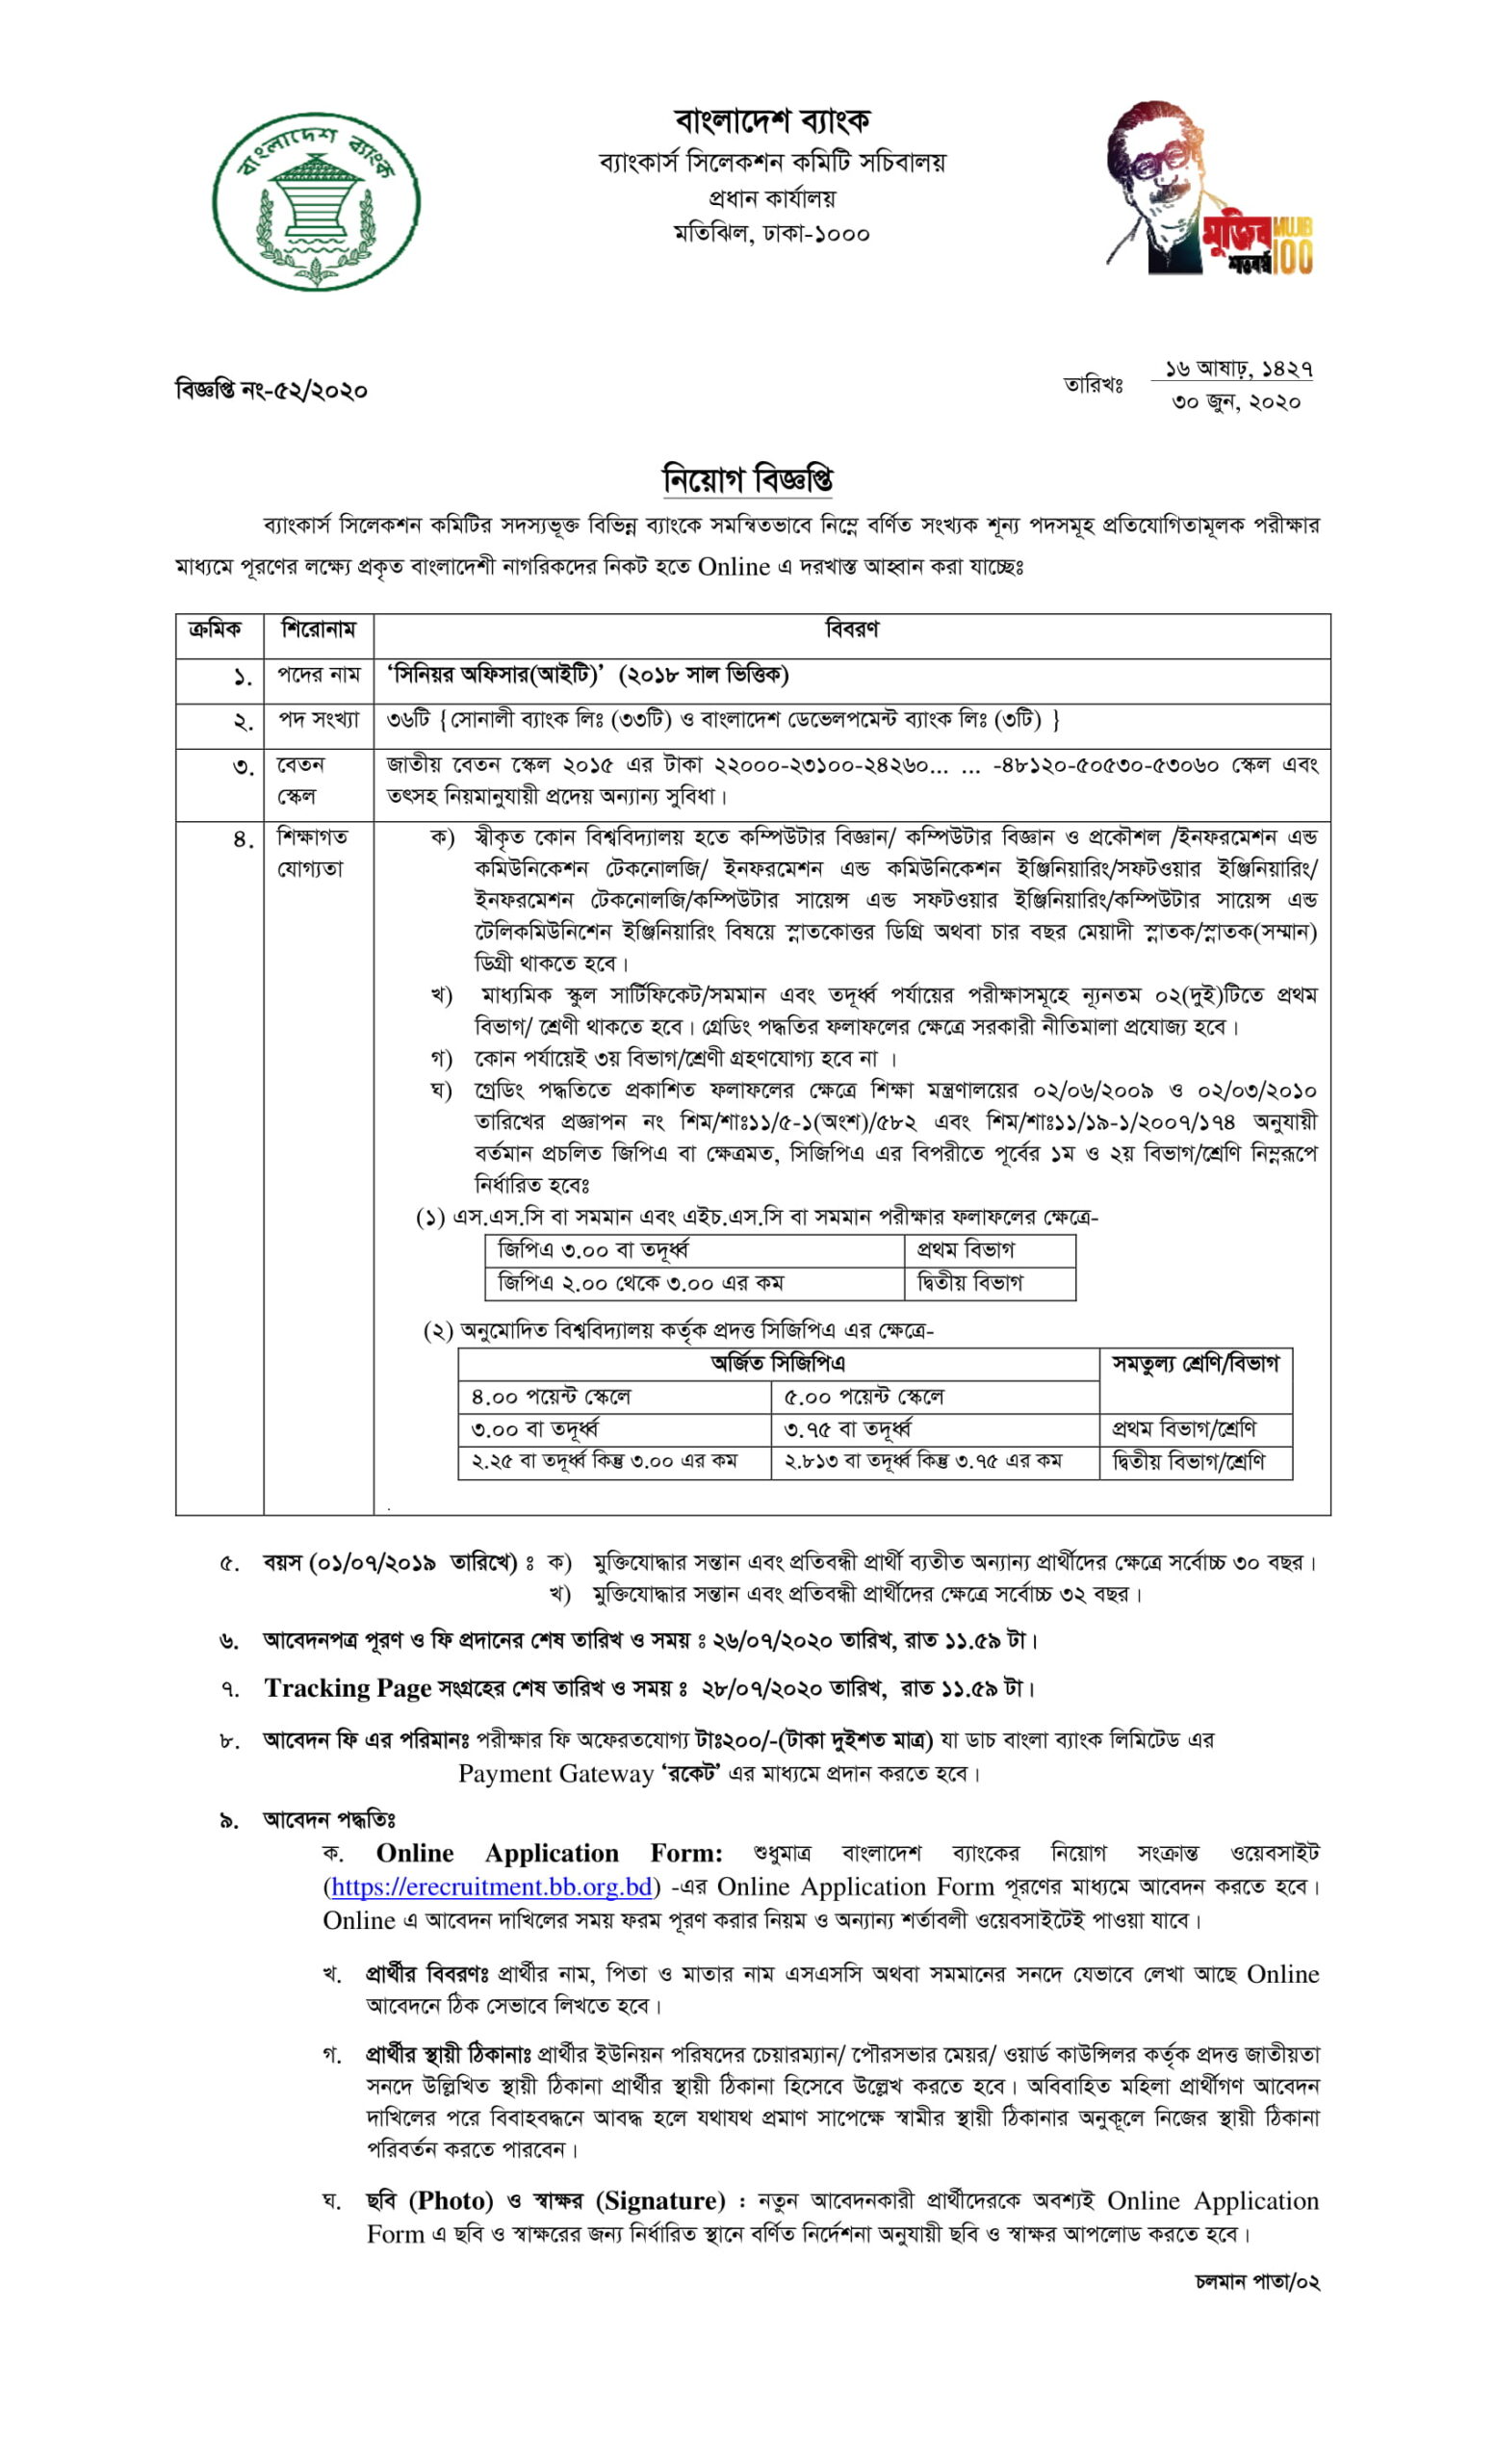 Sonali Bank Ltd Job circular 2020